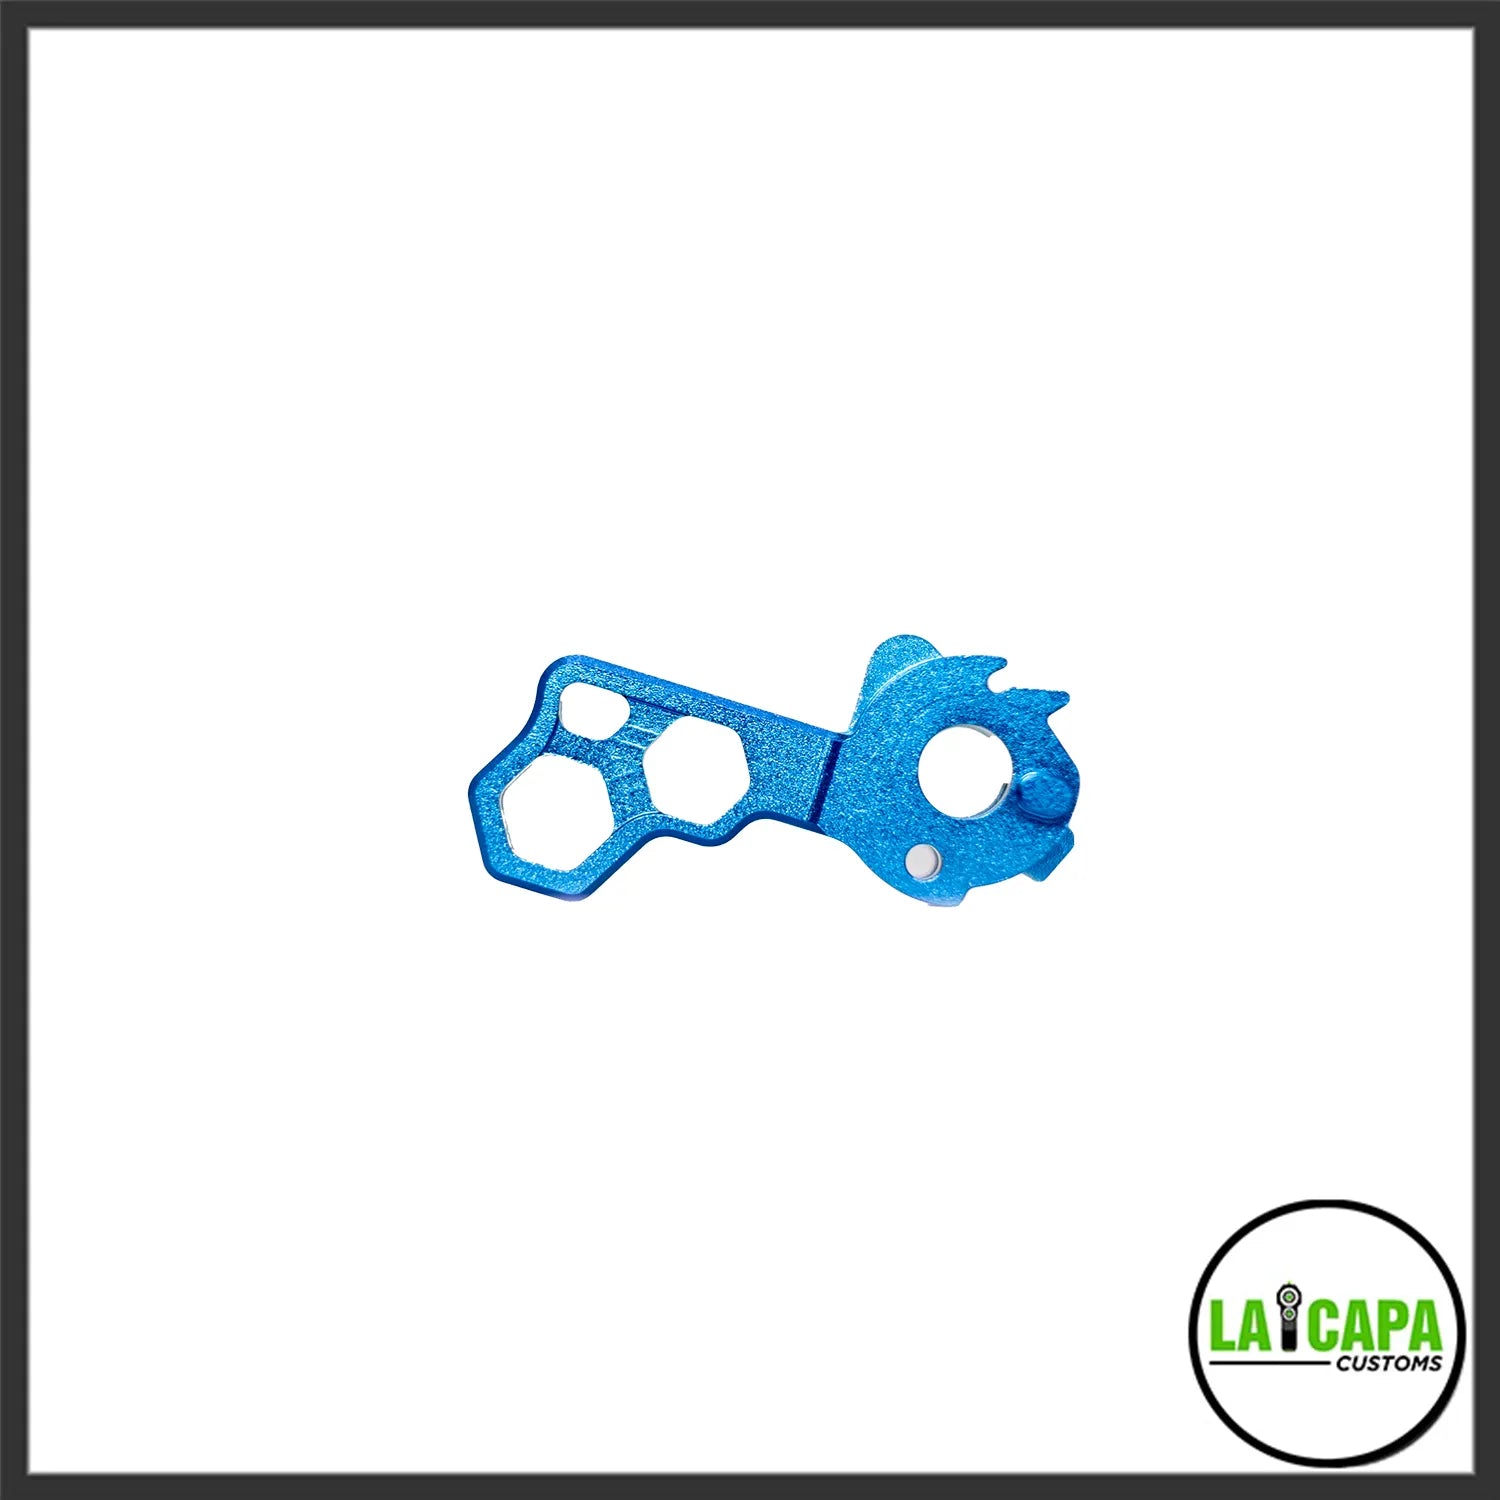 LA Capa Customs “HIVE” Duralumin Hammer for Hi Capa - Blue